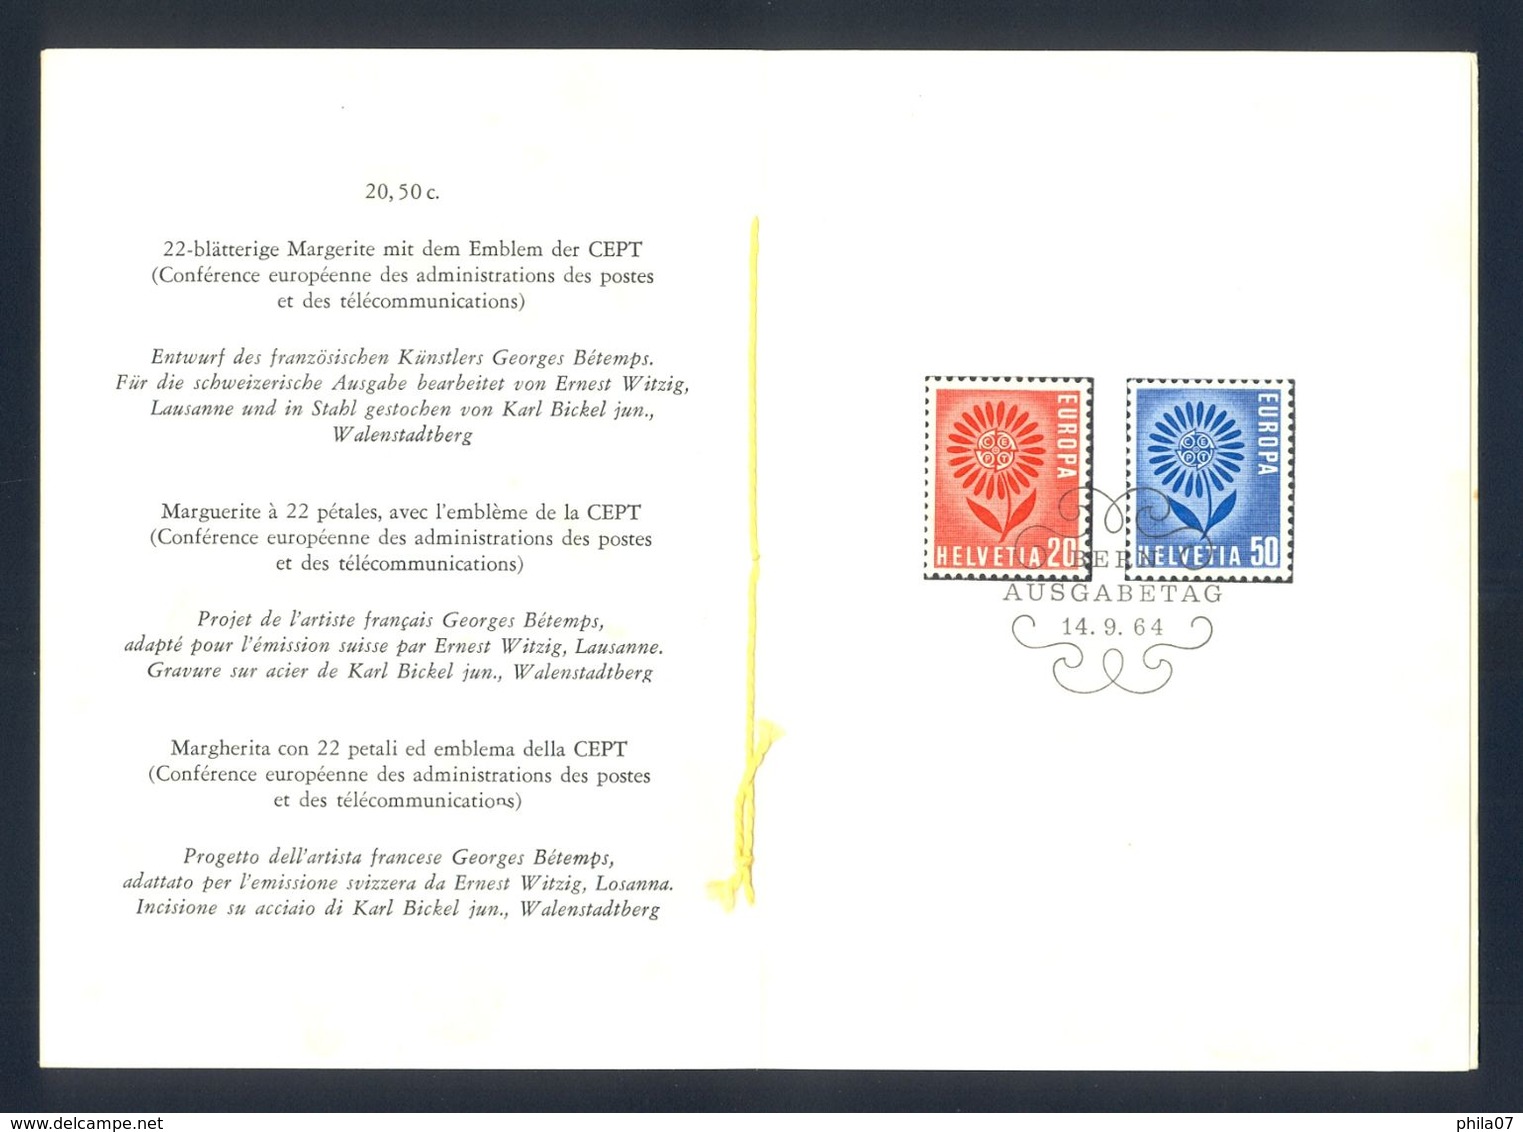 SWITZERLAND - Sondermarken 1964, Timbres Speciali Francobolli Speciali Europa-CEPT - With Commemorative Cancel - 1964